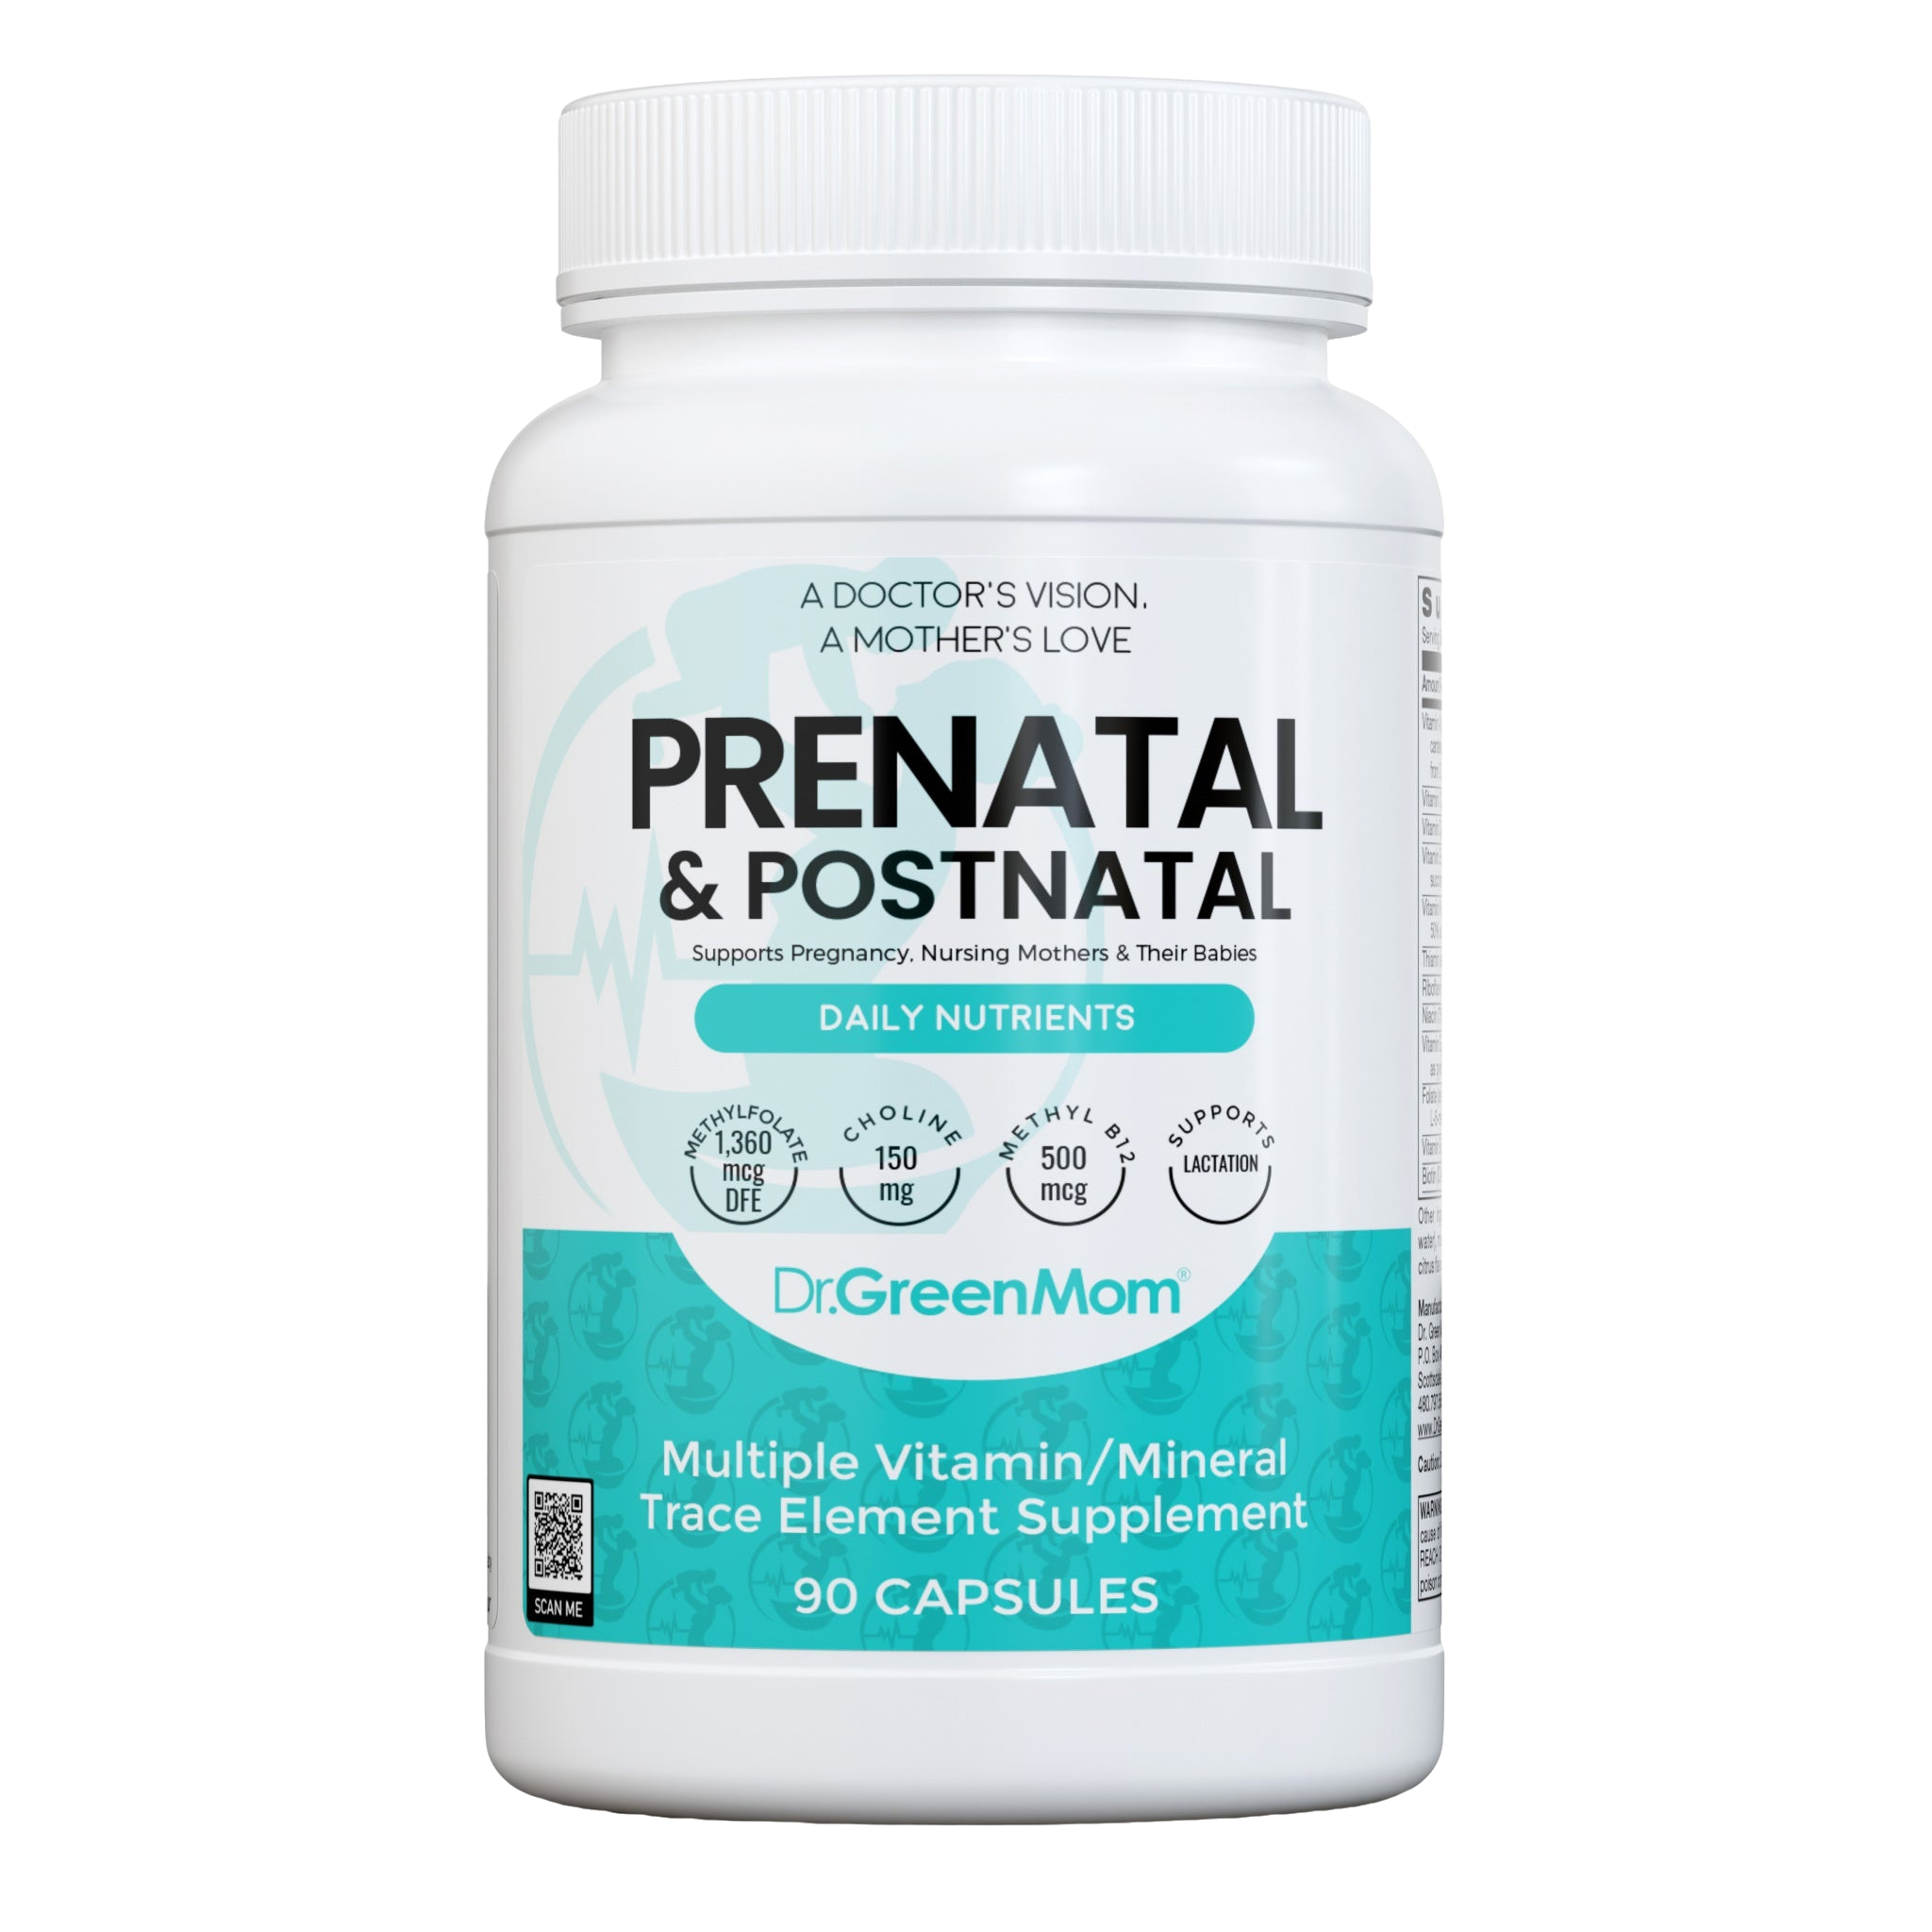 Bundle product Prenatal & Postnatal Daily Nutrients